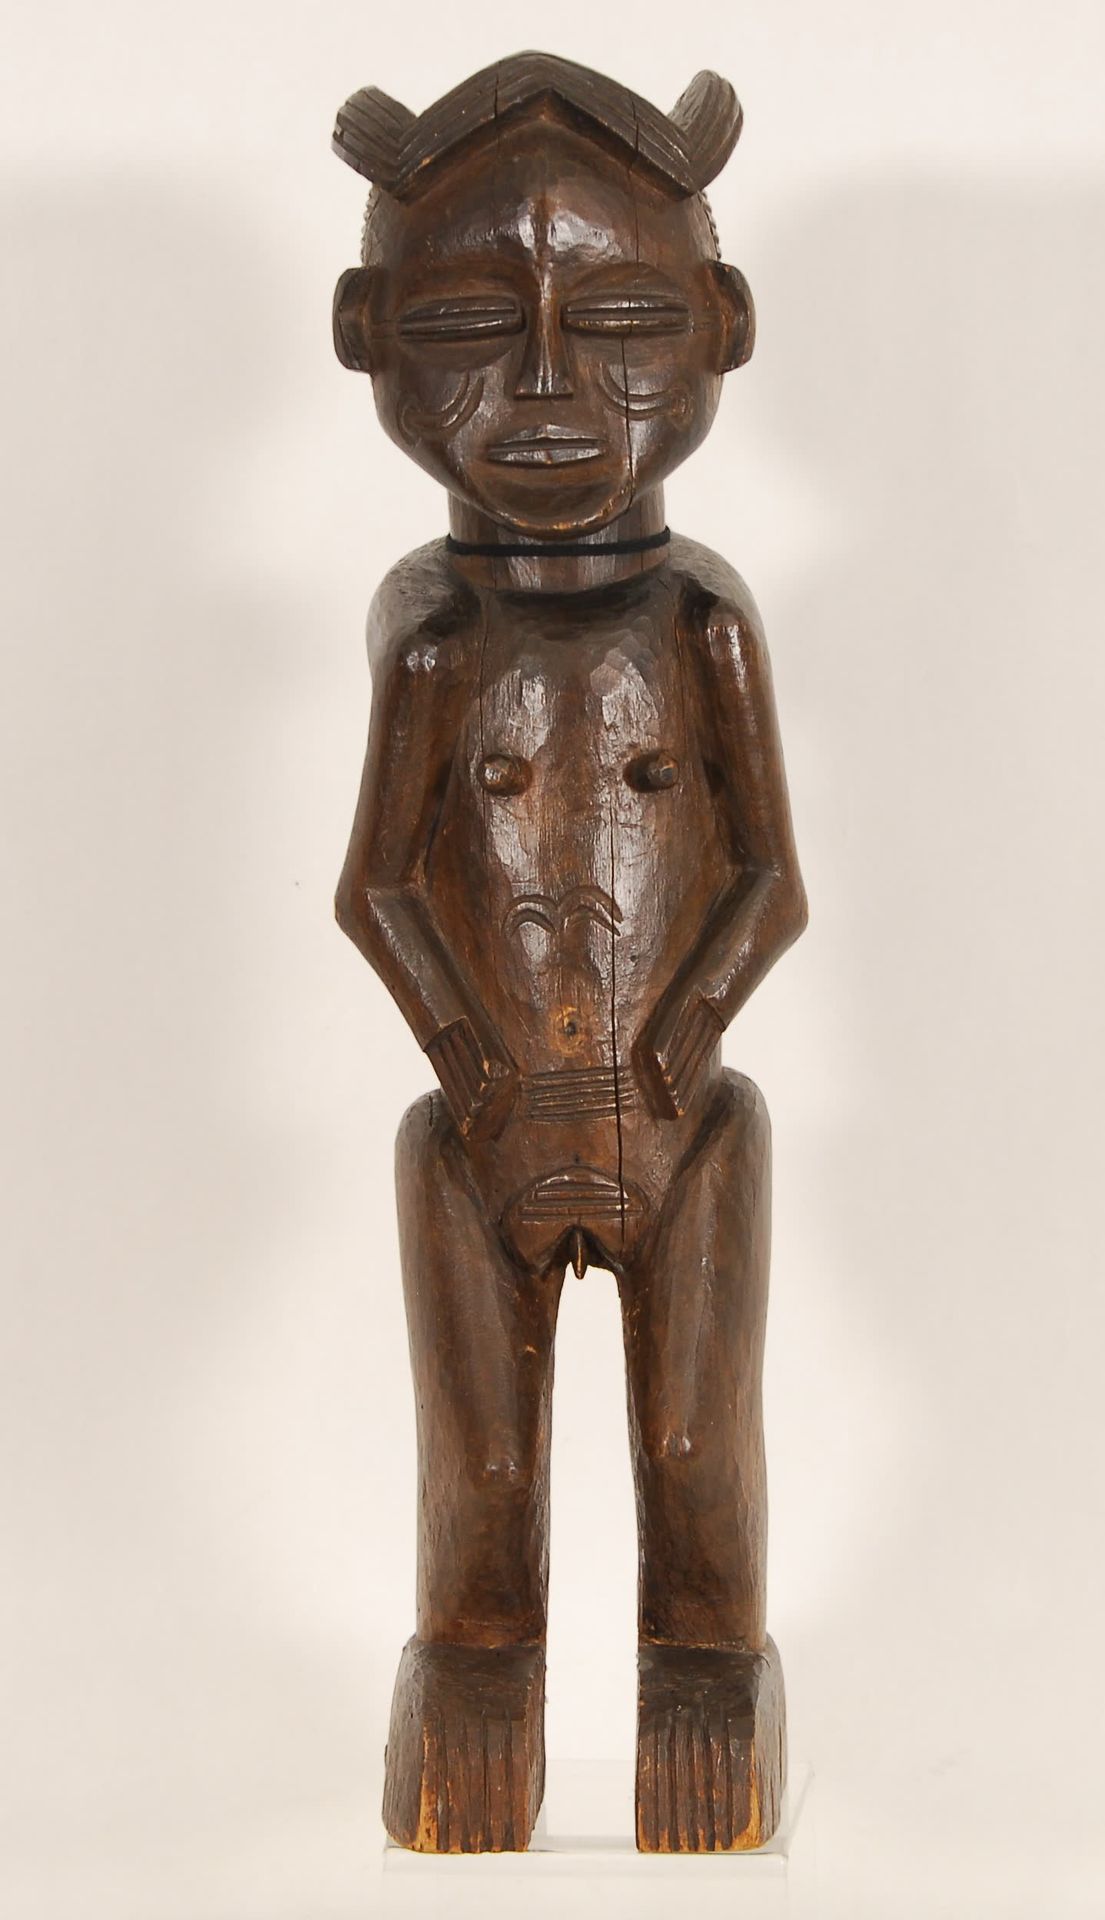 Afrique - Africa Estatuilla
Madera tallada, Angola.
H. 48 cm.